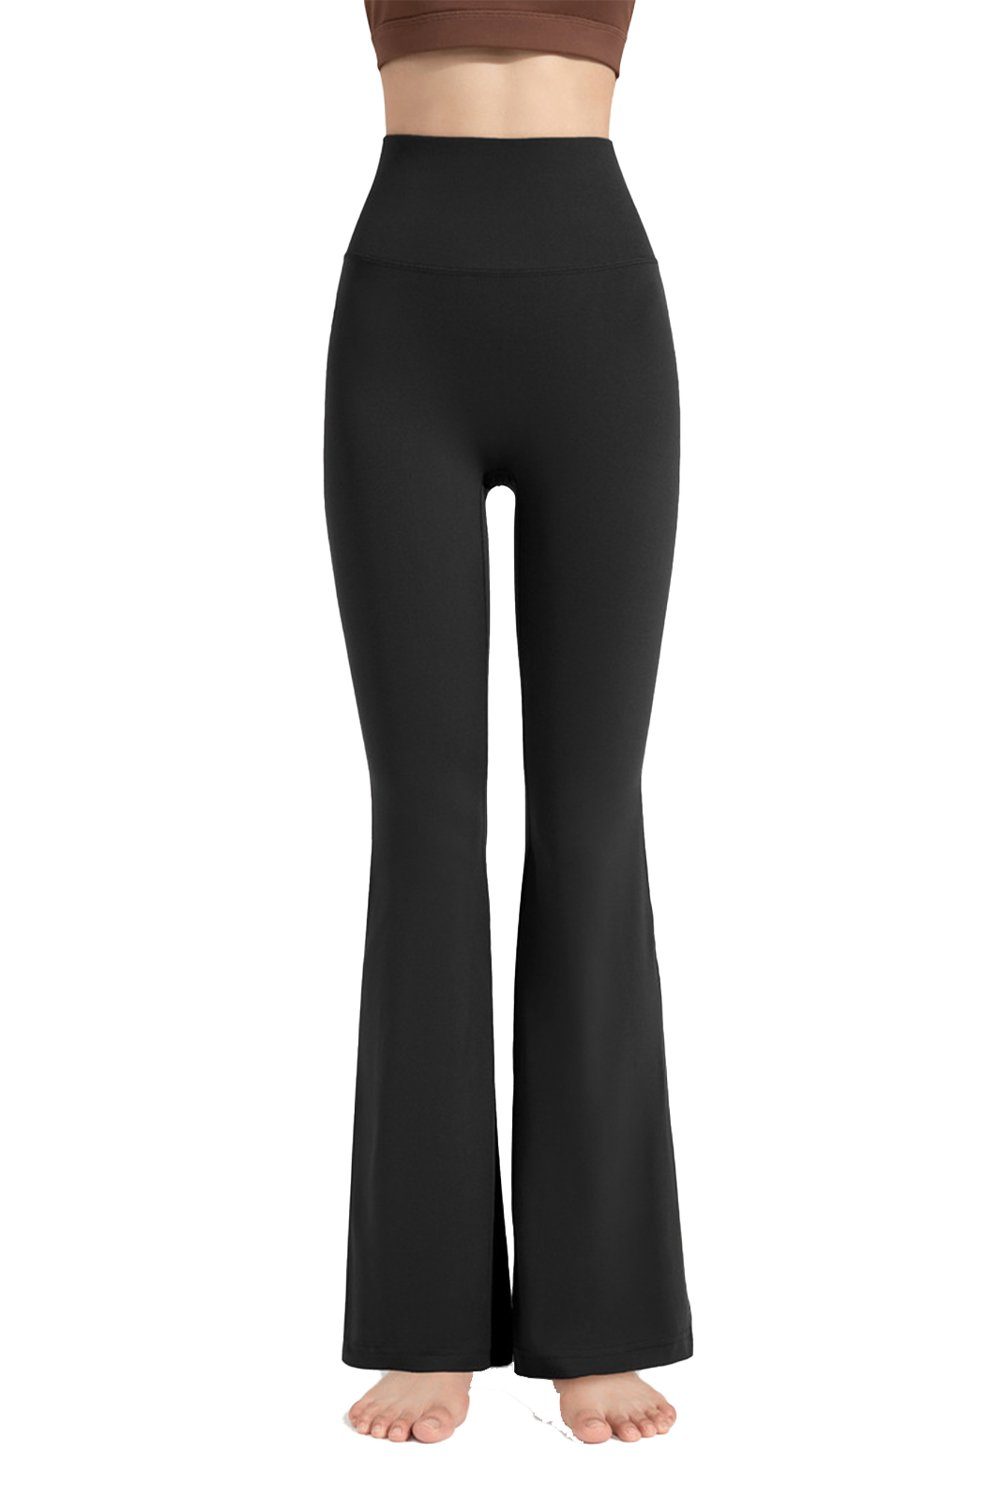 Orient Phoenix Yogatights Damen-Yogahose mit hoher Taille, hüfthebend Lange  Slim Fit Flared Athletic Fitness Hosen